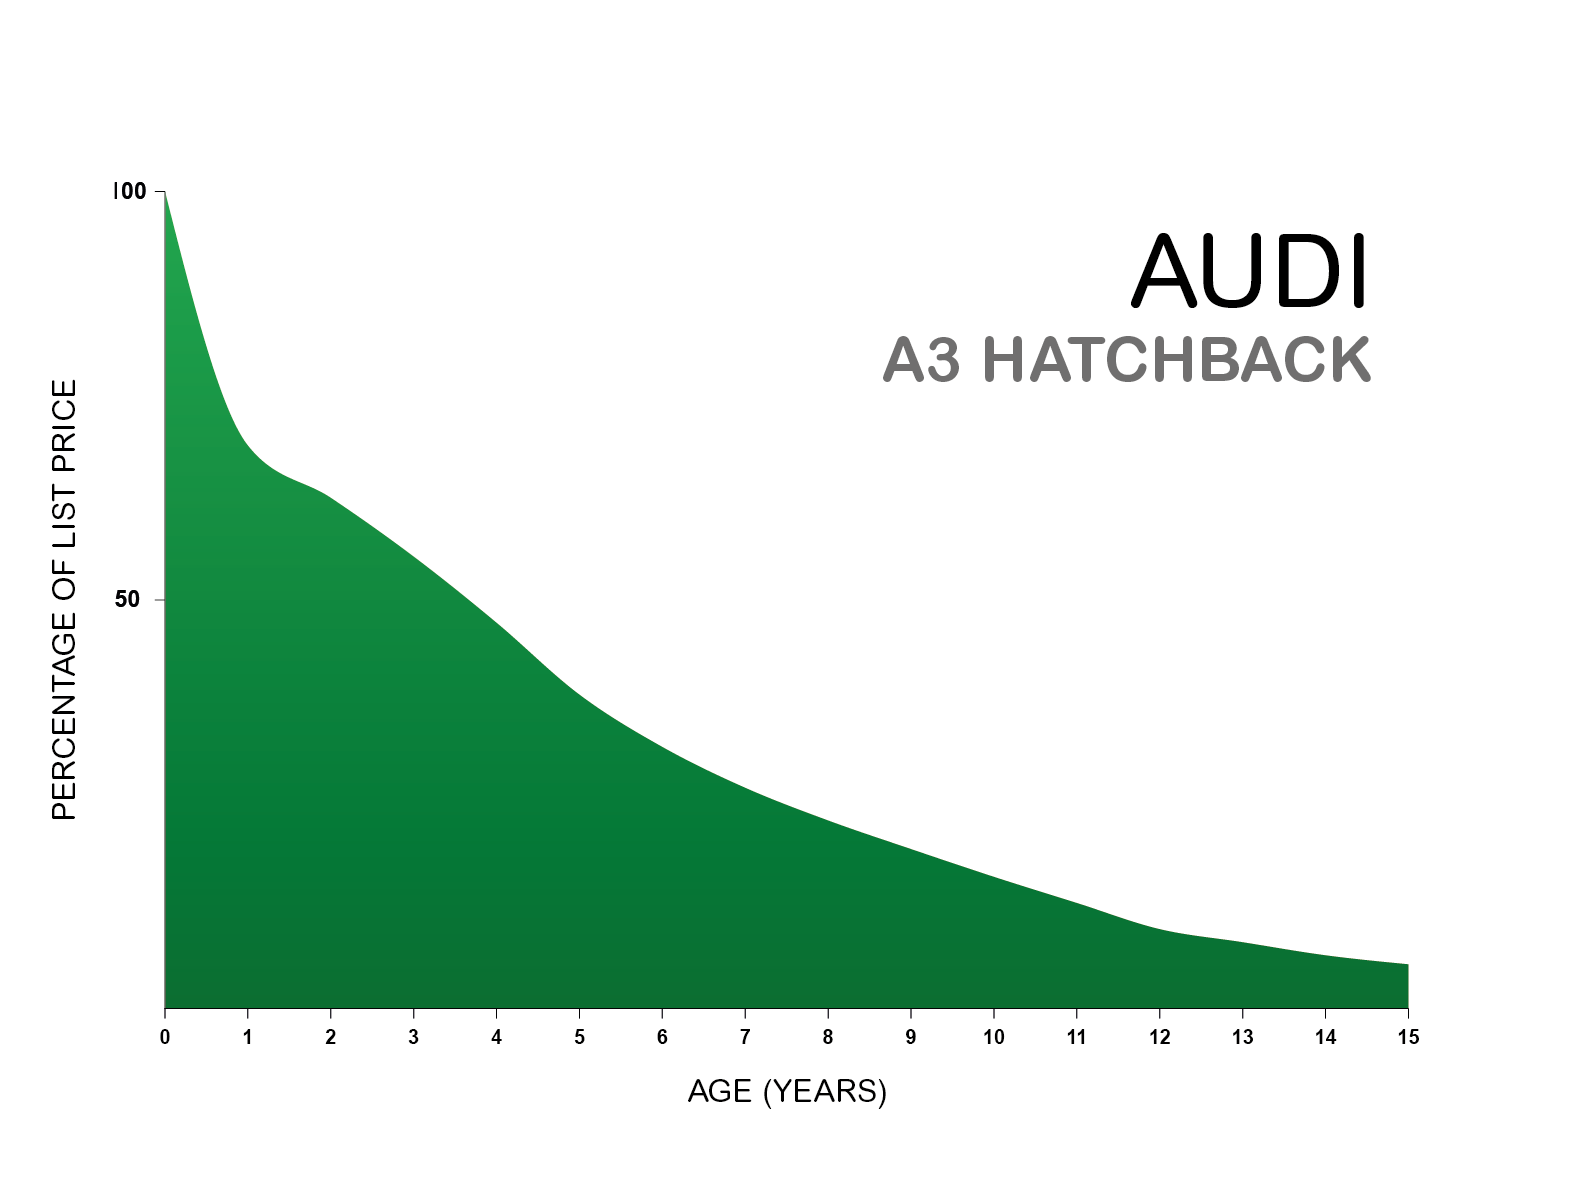 Audi A3 hatchback depreciation chart